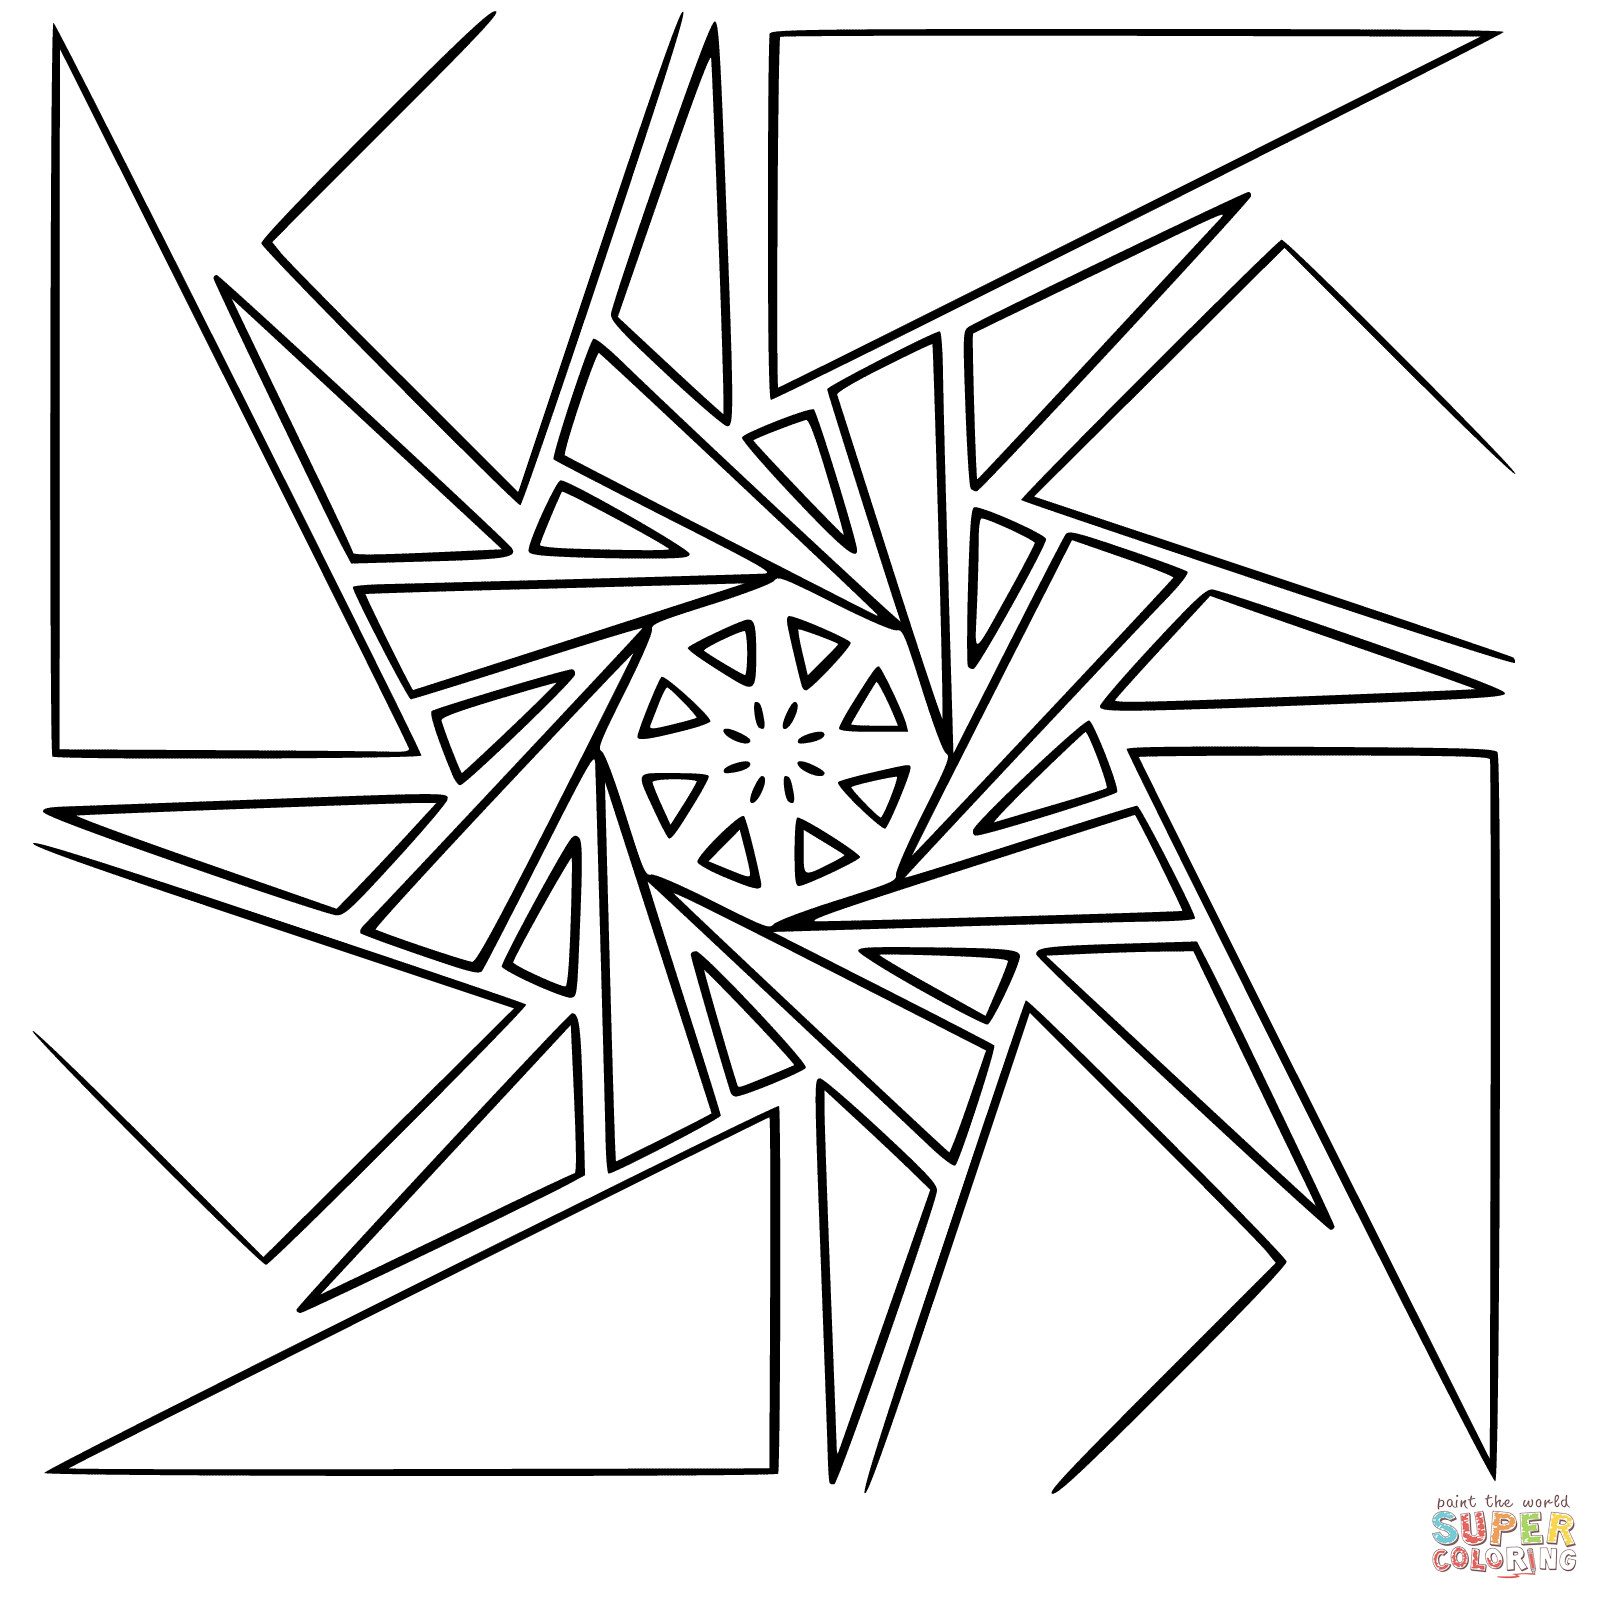 Printable Geometric Coloring Pages
 Geometric Mandala coloring page